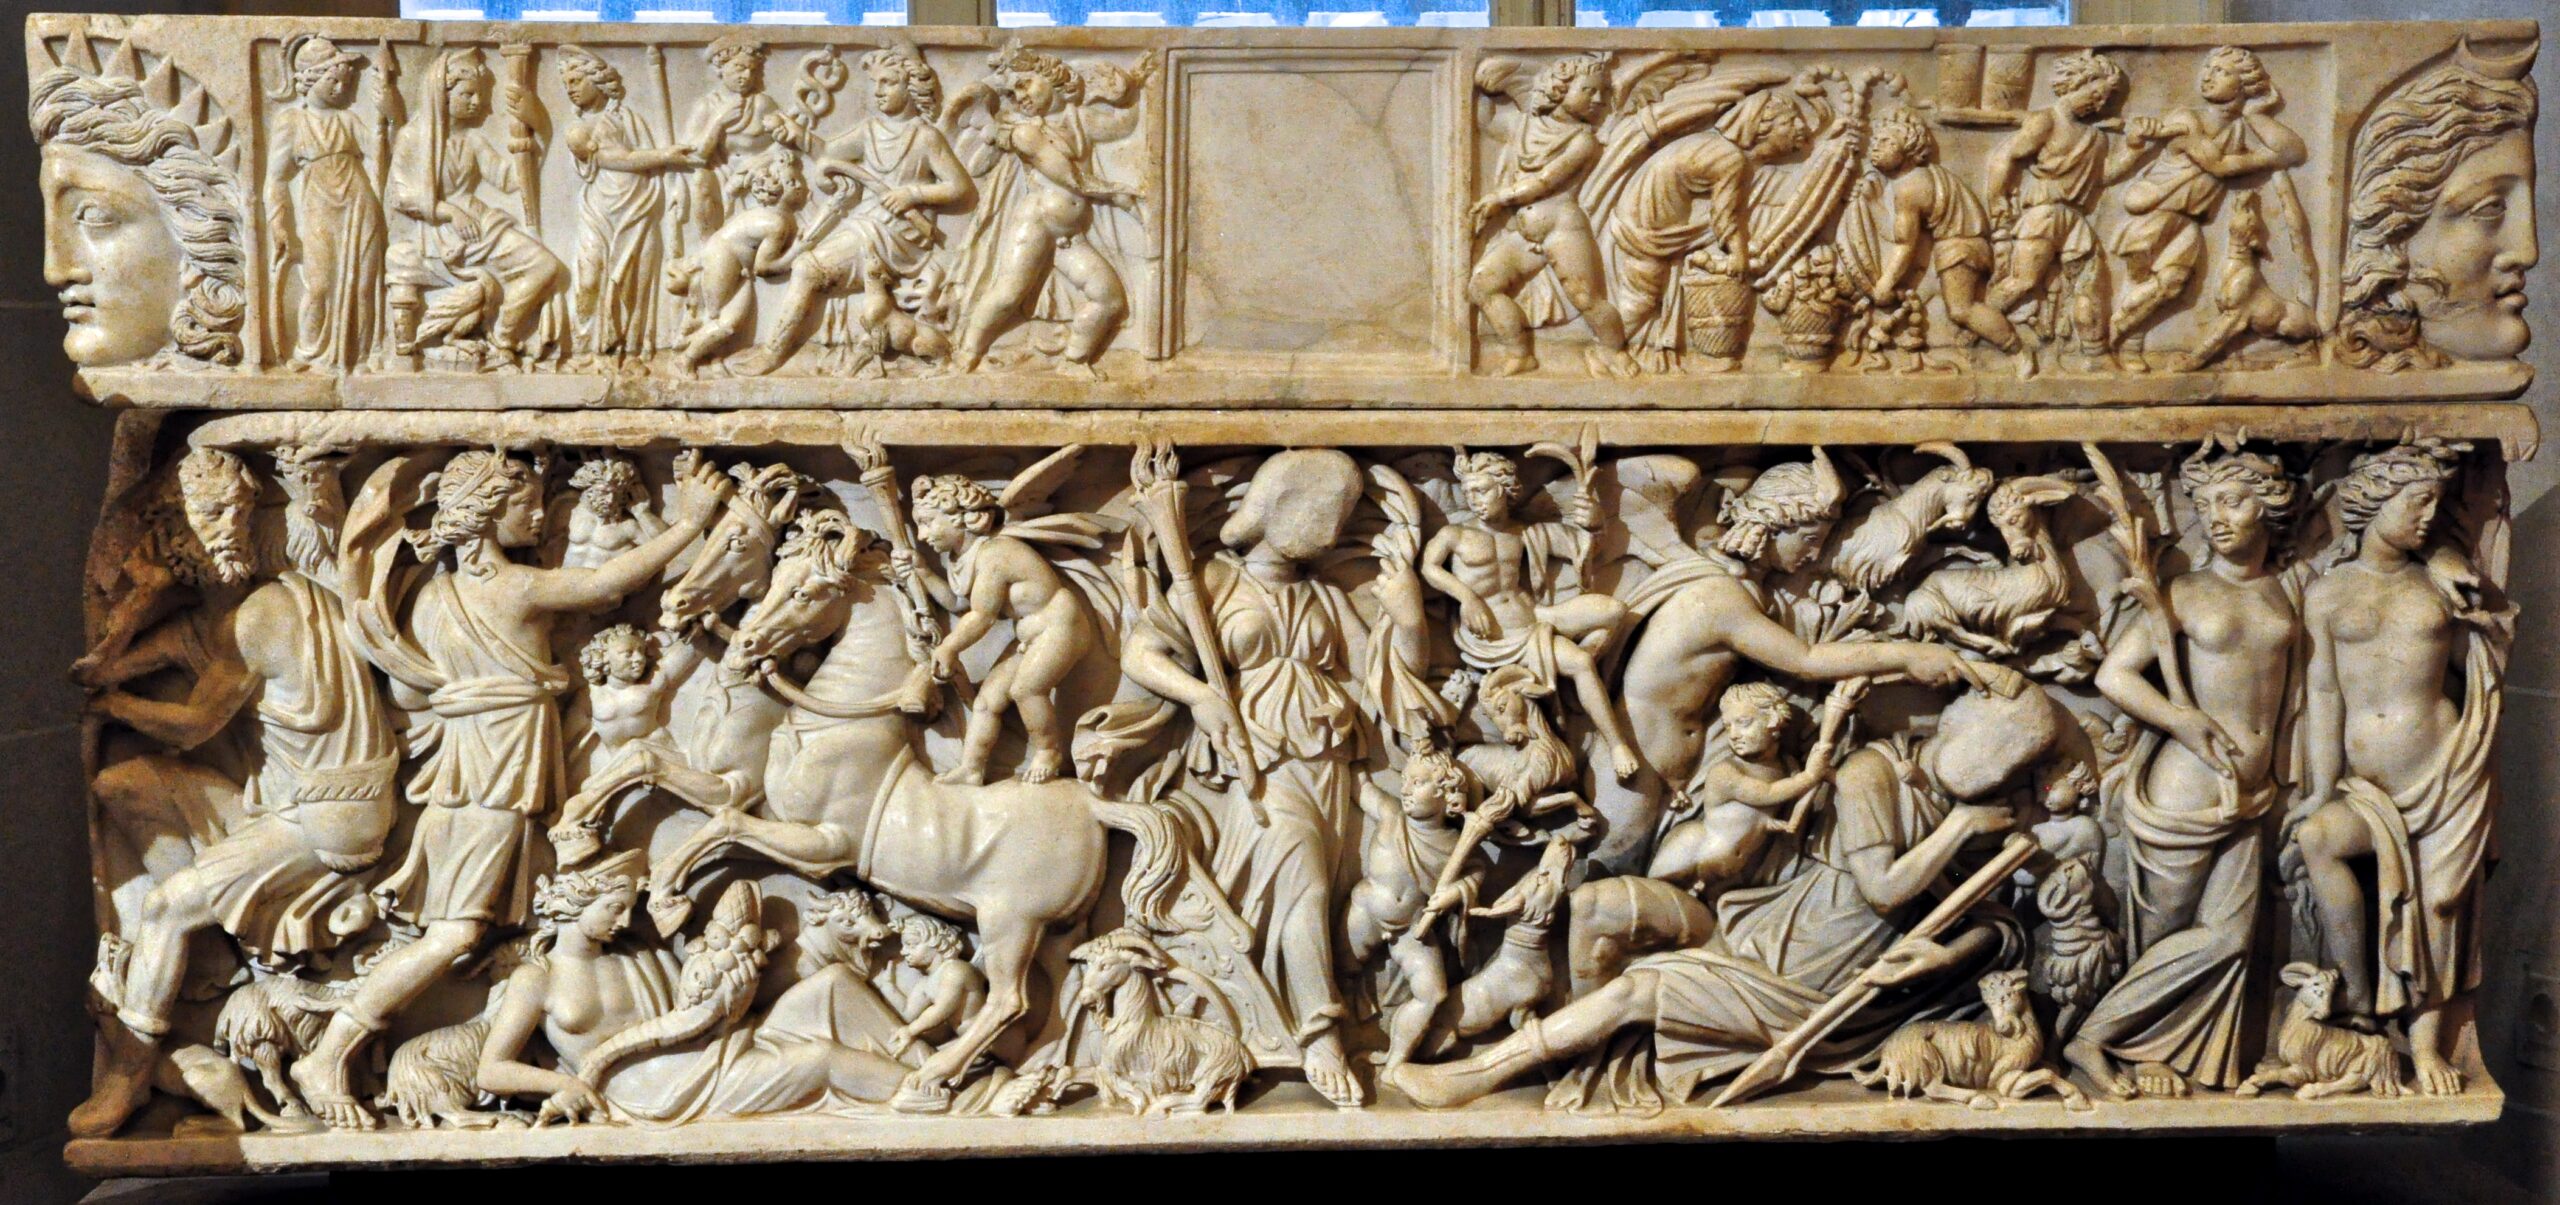 Louvre_Selene-and-Endymion_sarcophagus 280-90 ap JC ca